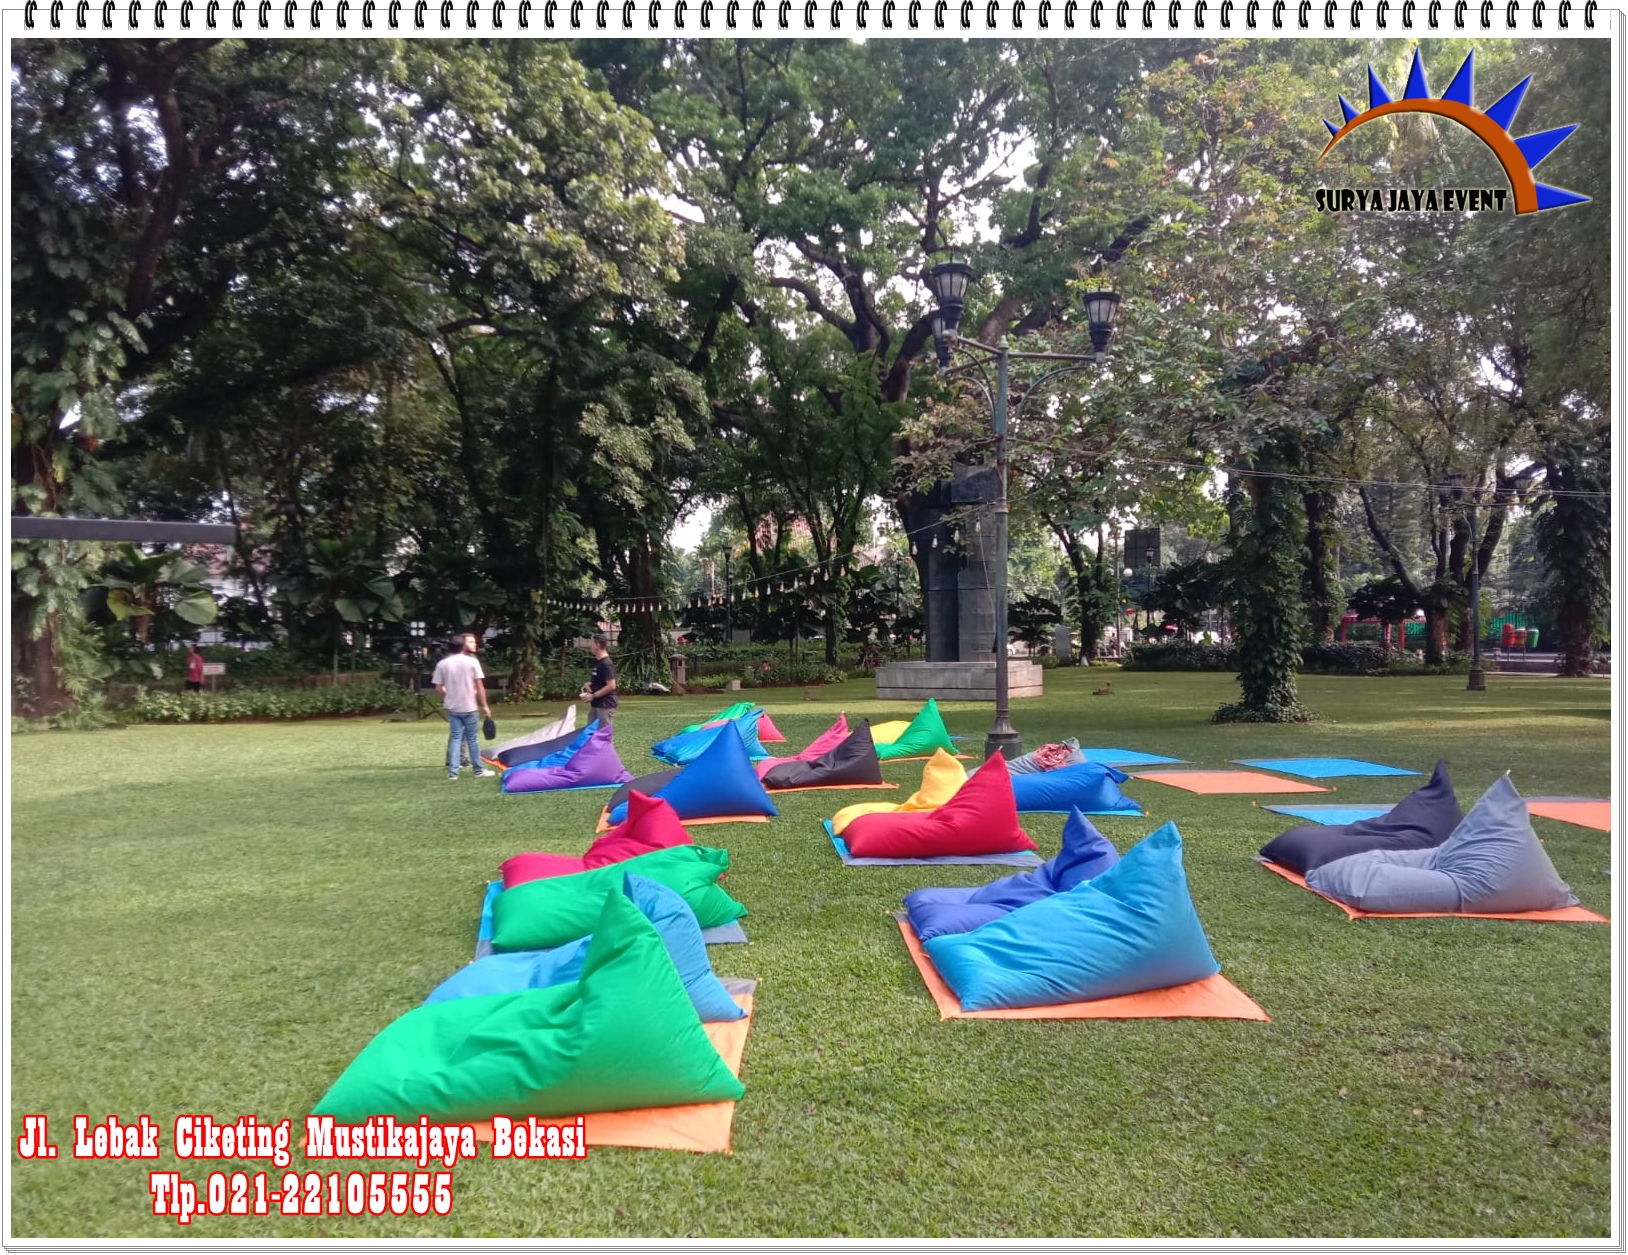 Sewa Bantal Bean Bag Event Outdoor Minimalis Tangerang